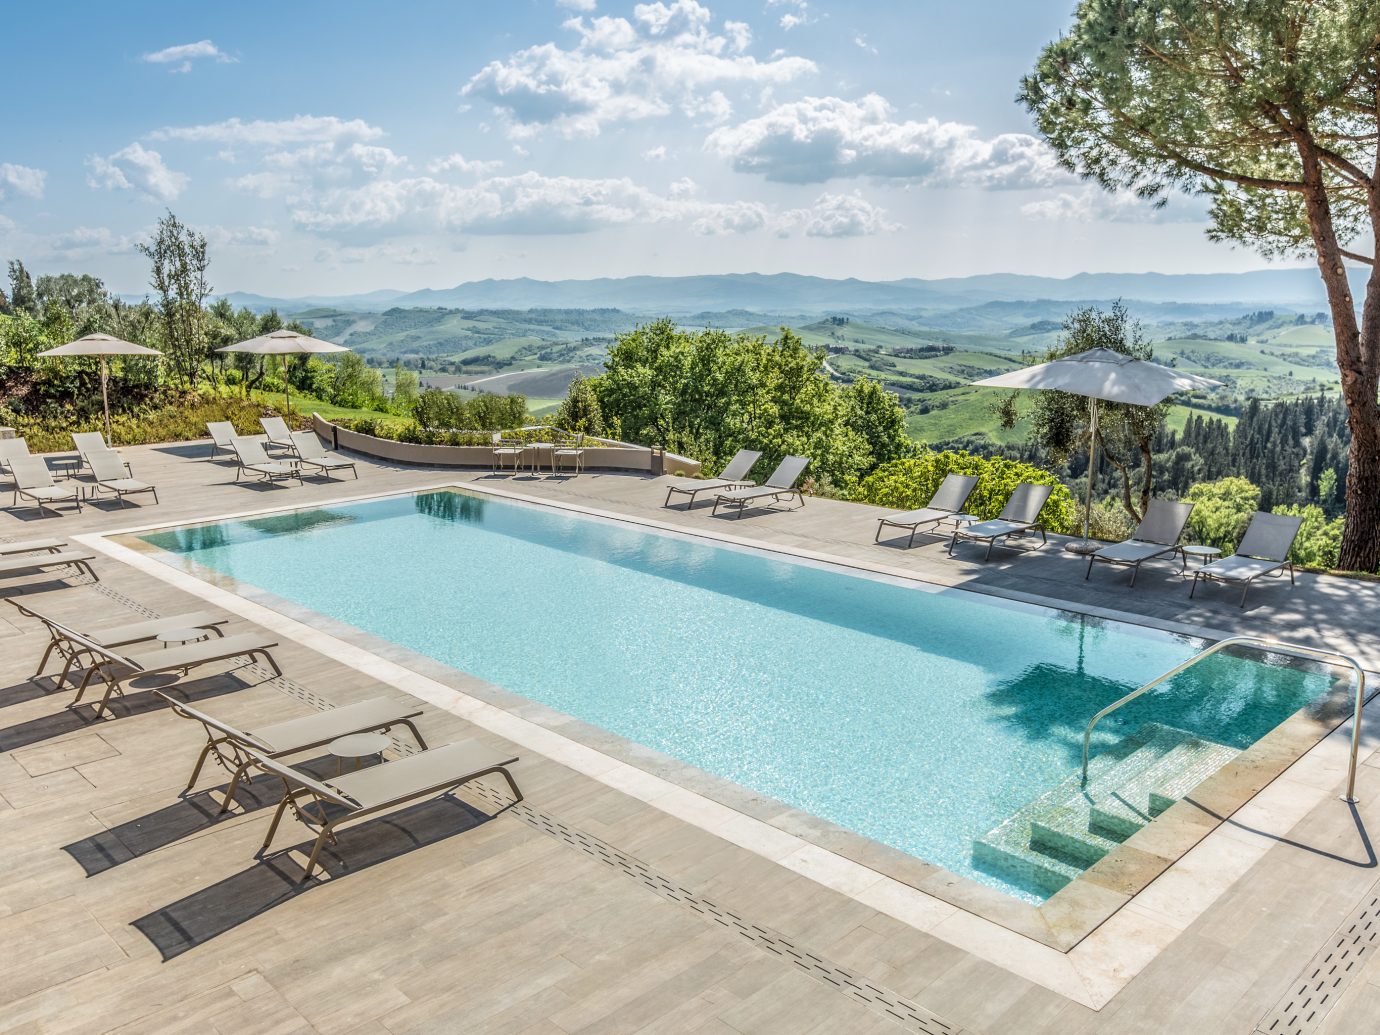 Pool at Hotel Il Castelfalfi in Tuscany